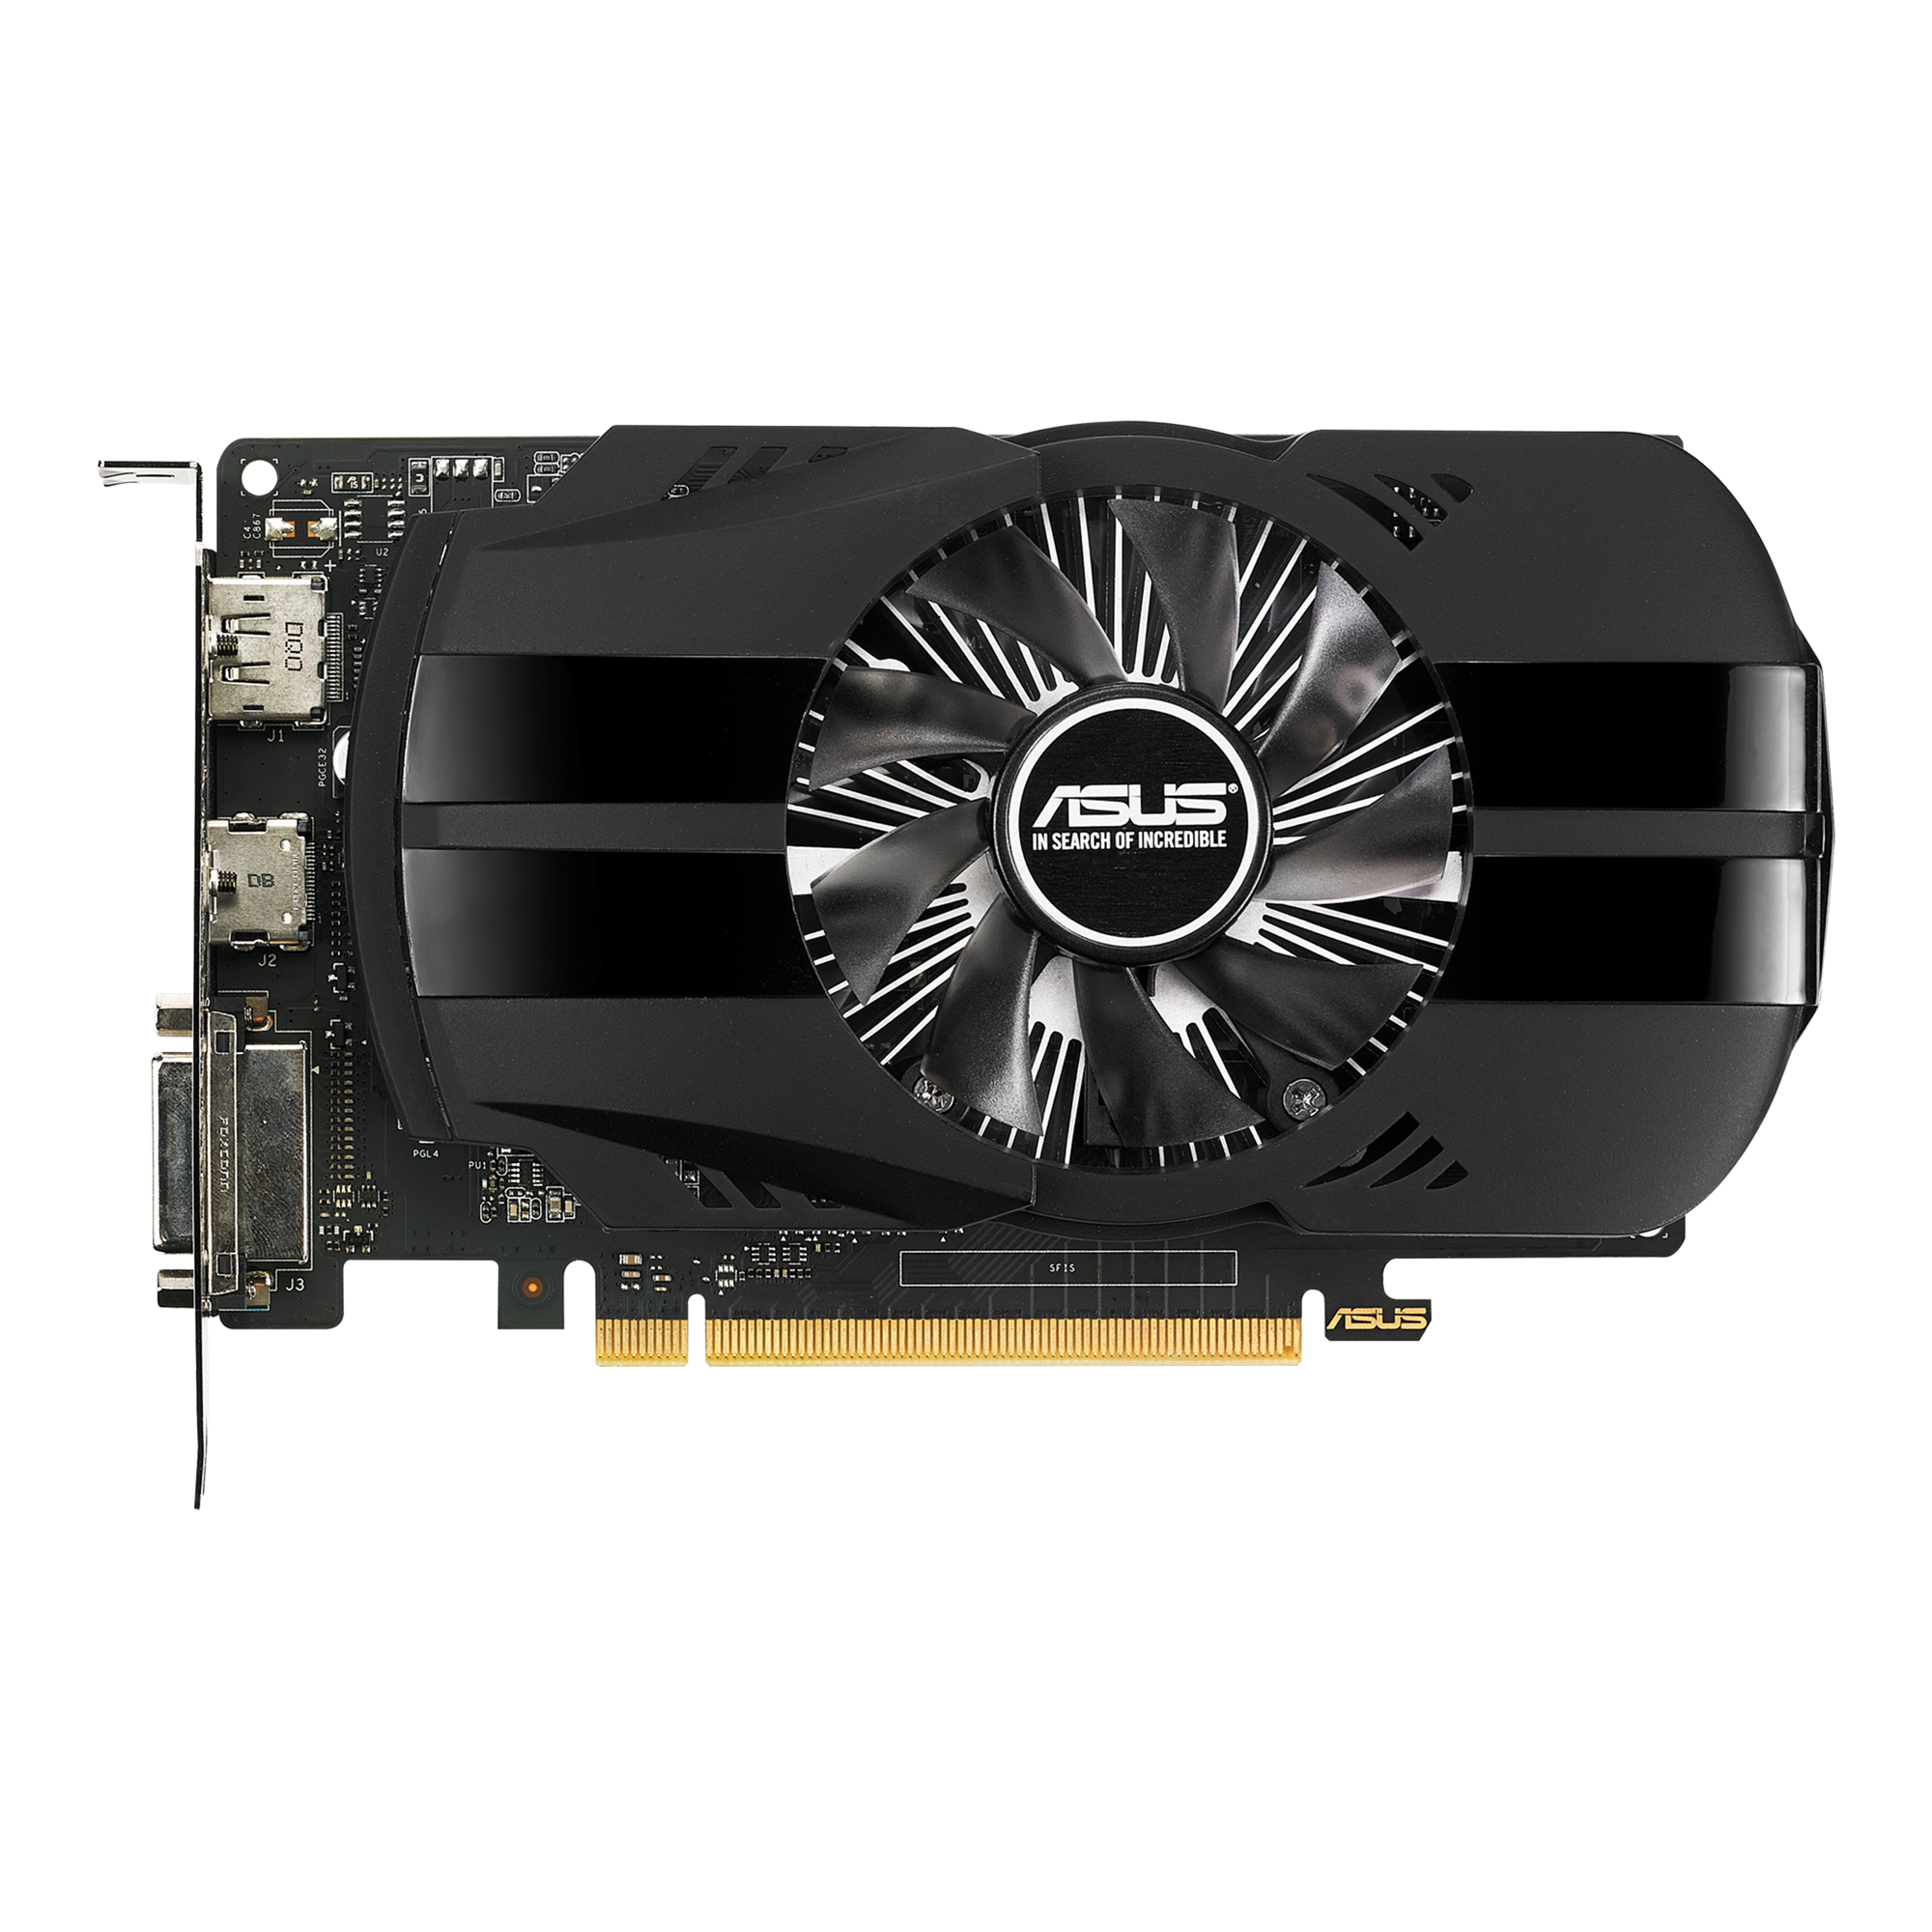 MSI GeForce GTX 1050 Ti GAMING X 4G Graphics Card PCI-E x16 Gaming App No SLI 